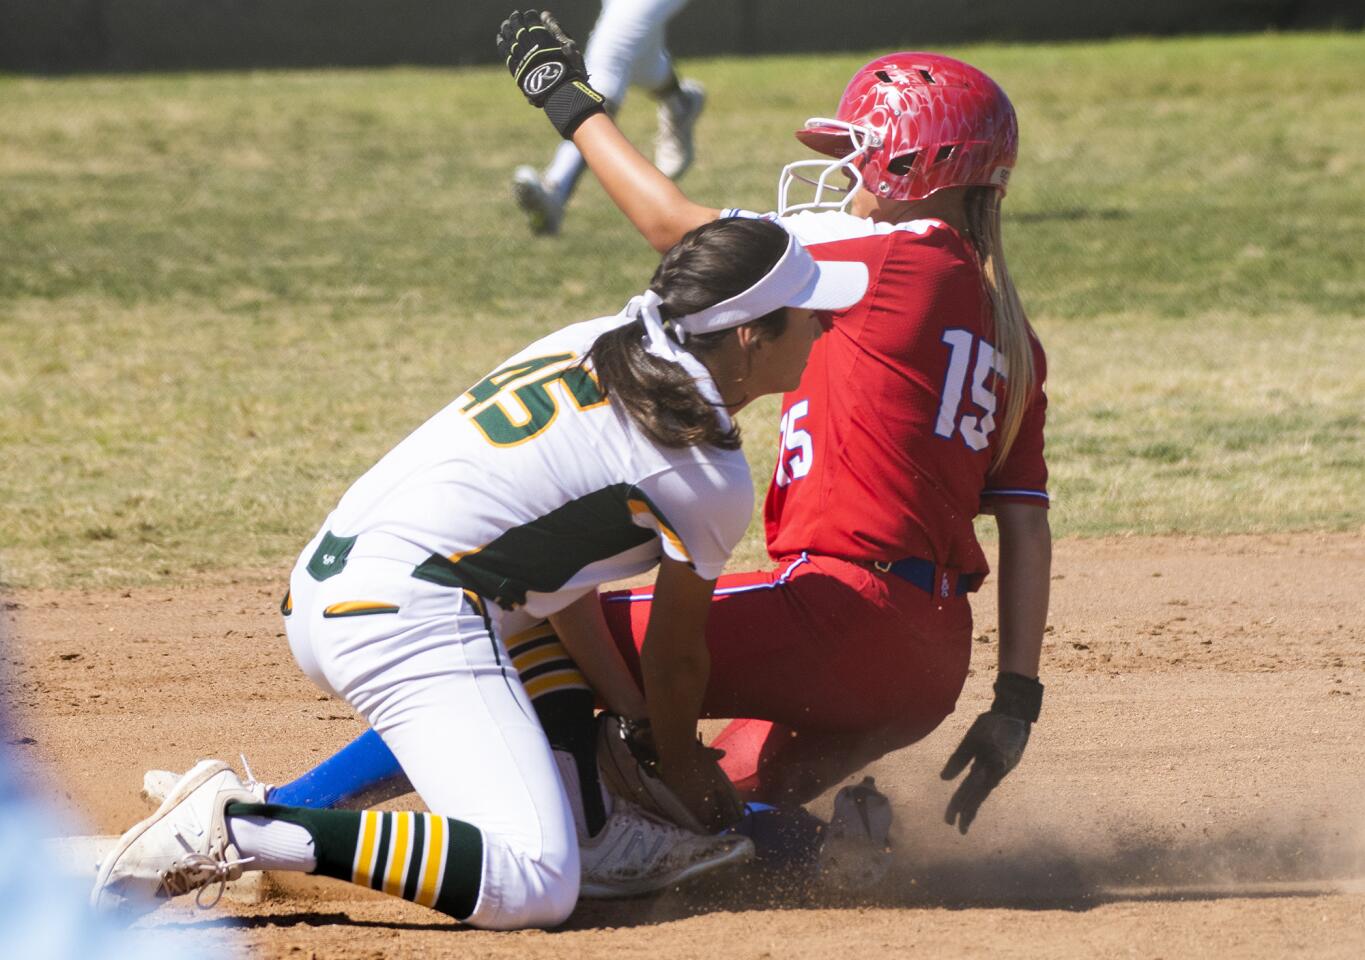 Photo Gallery: Edison vs. Los Alamitos in softball